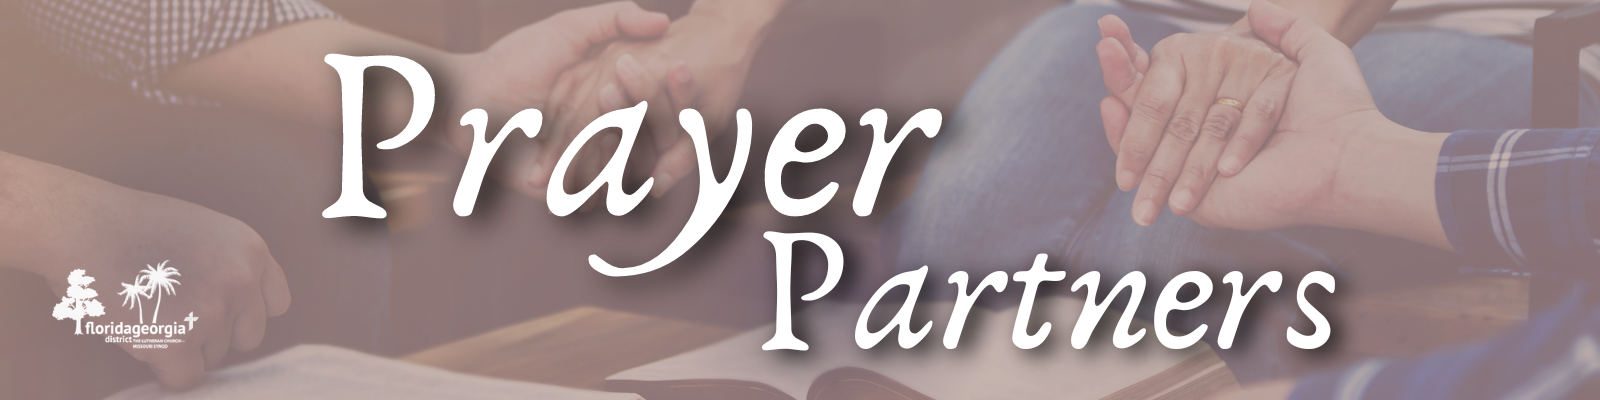 Prayer Partners - Header